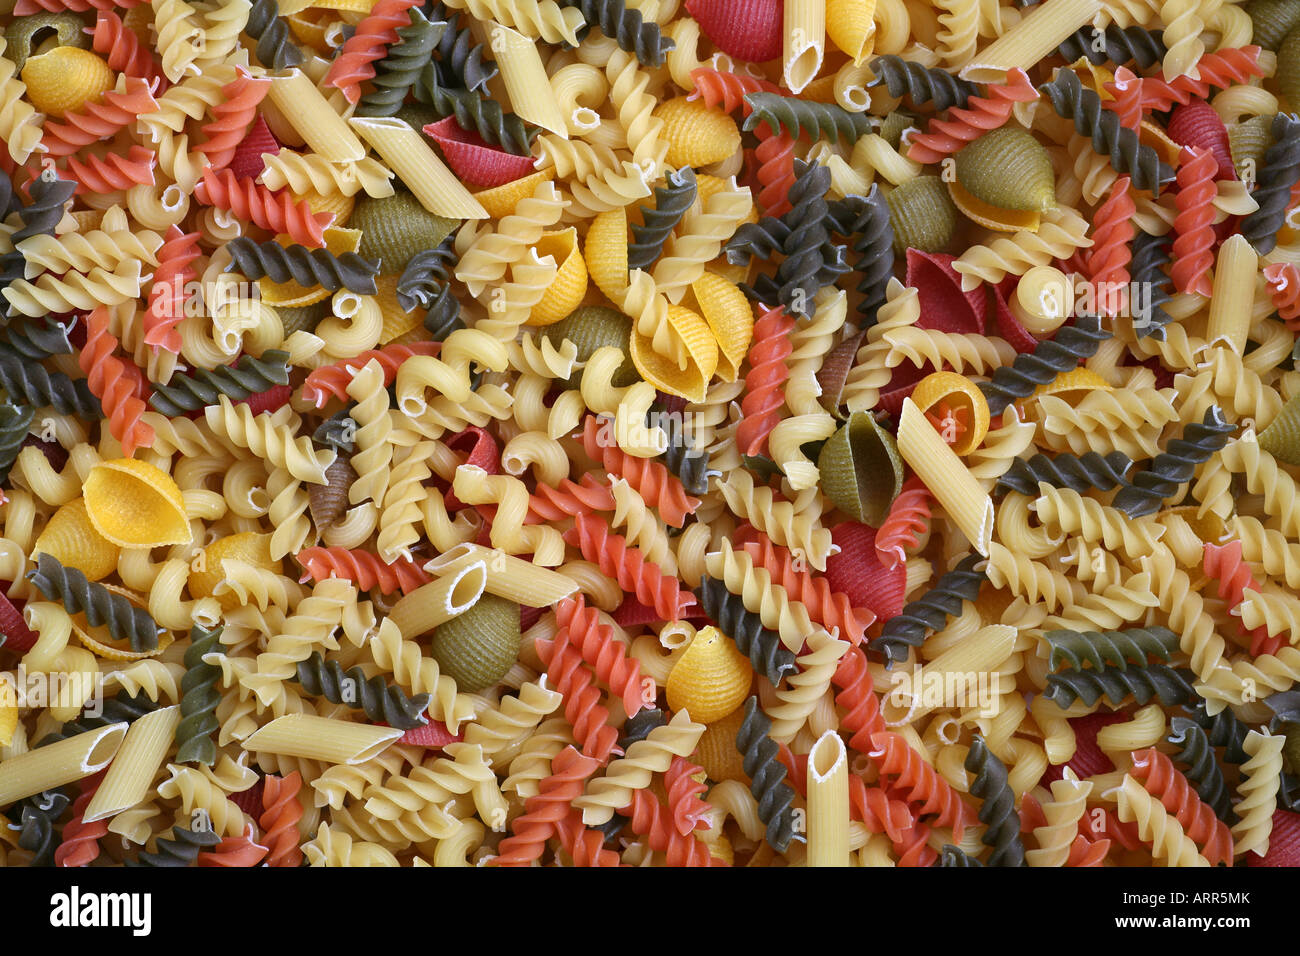 Mixture of pasta Stock Photo